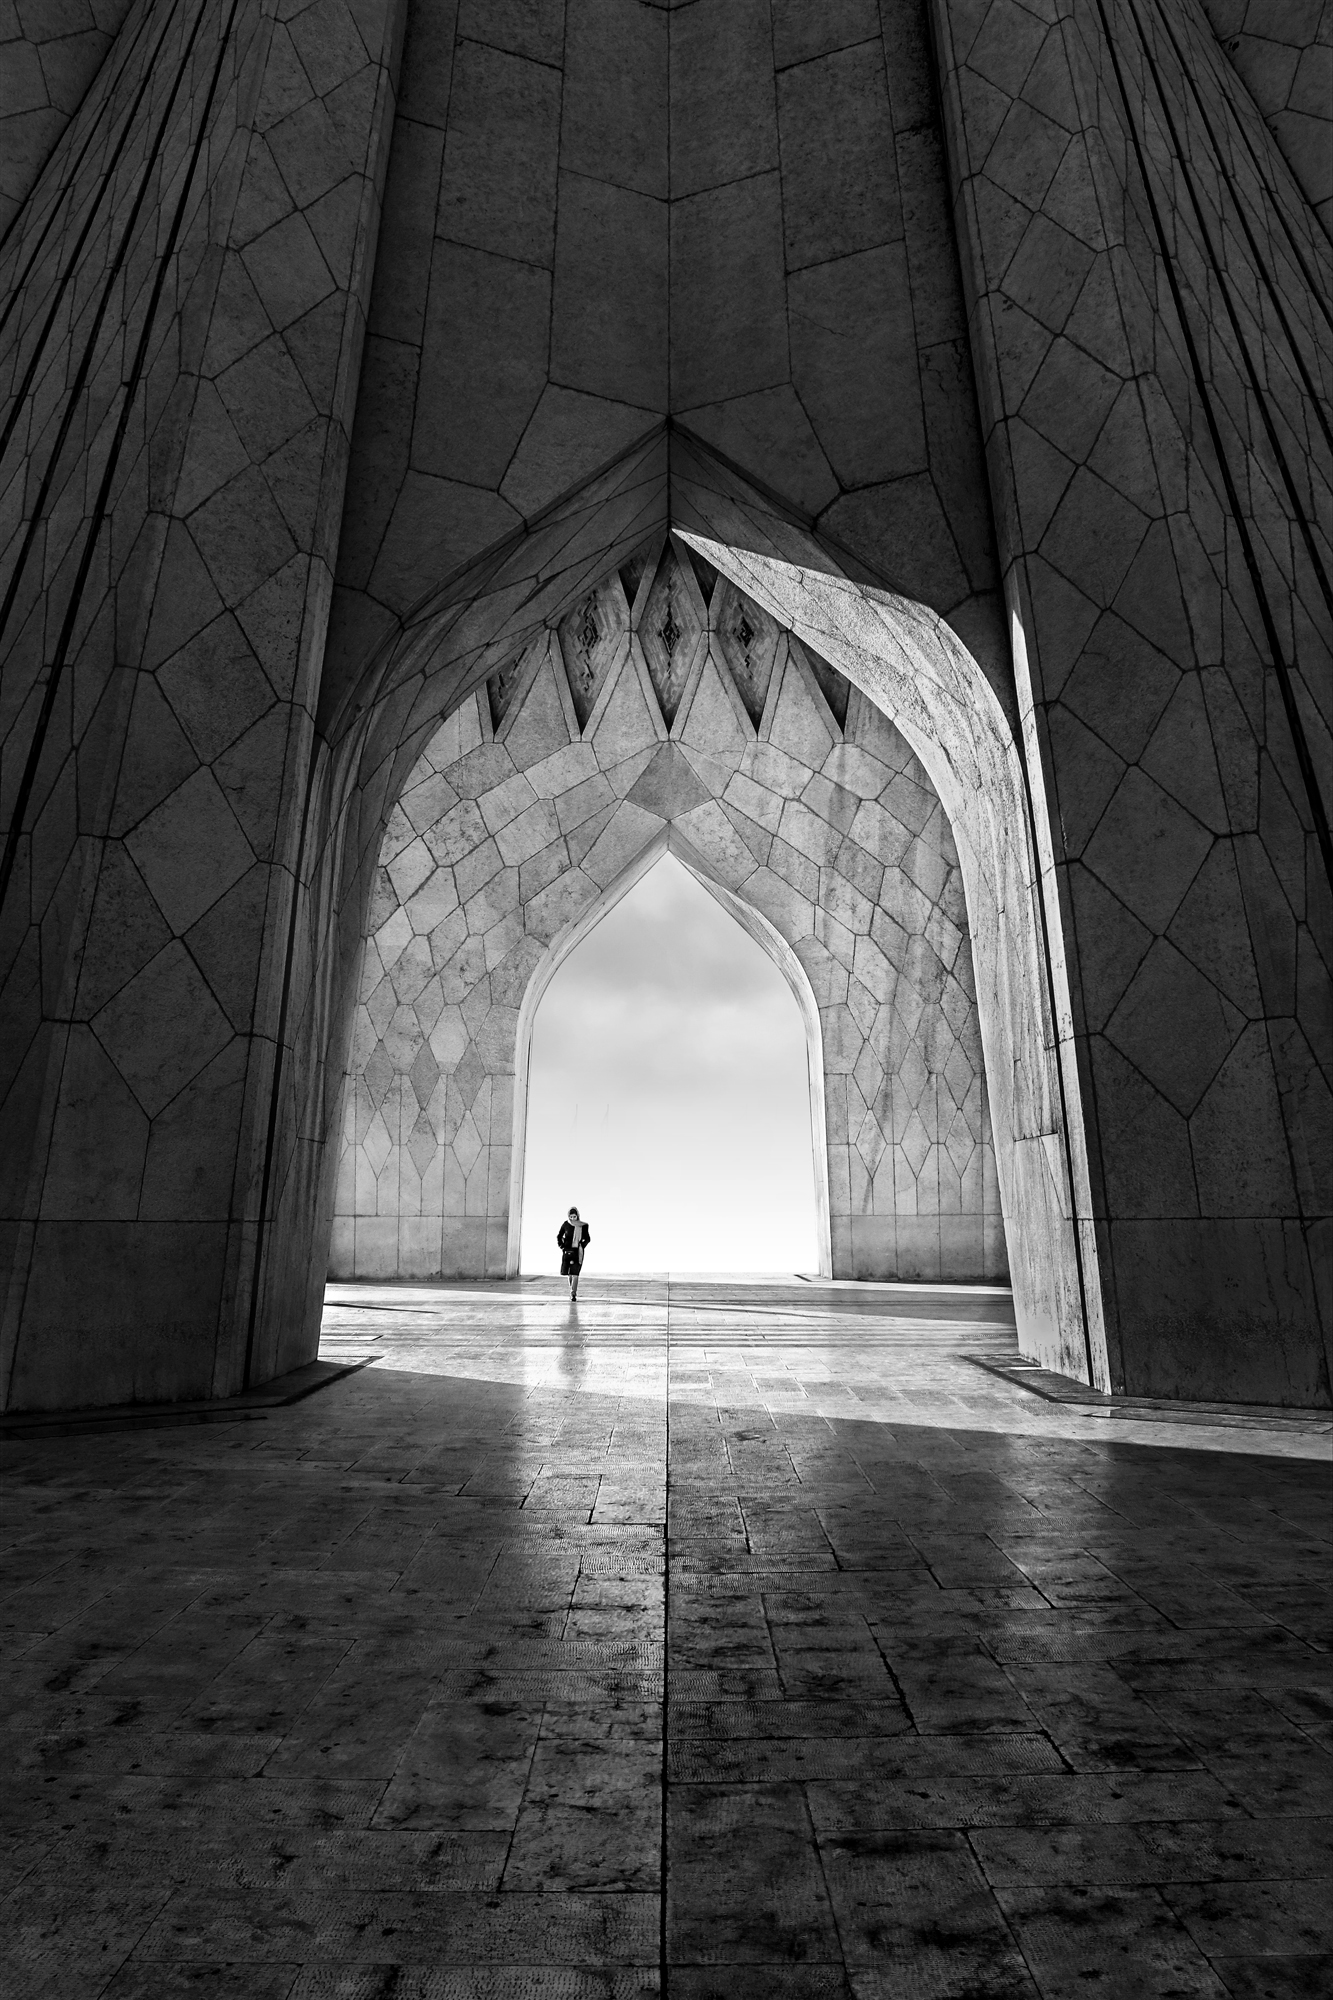 Categorie: Architecture & Interior, Fine Art, Street - Photographer: MOHAMMAD DADSETAN - Location: Iran, Tehran